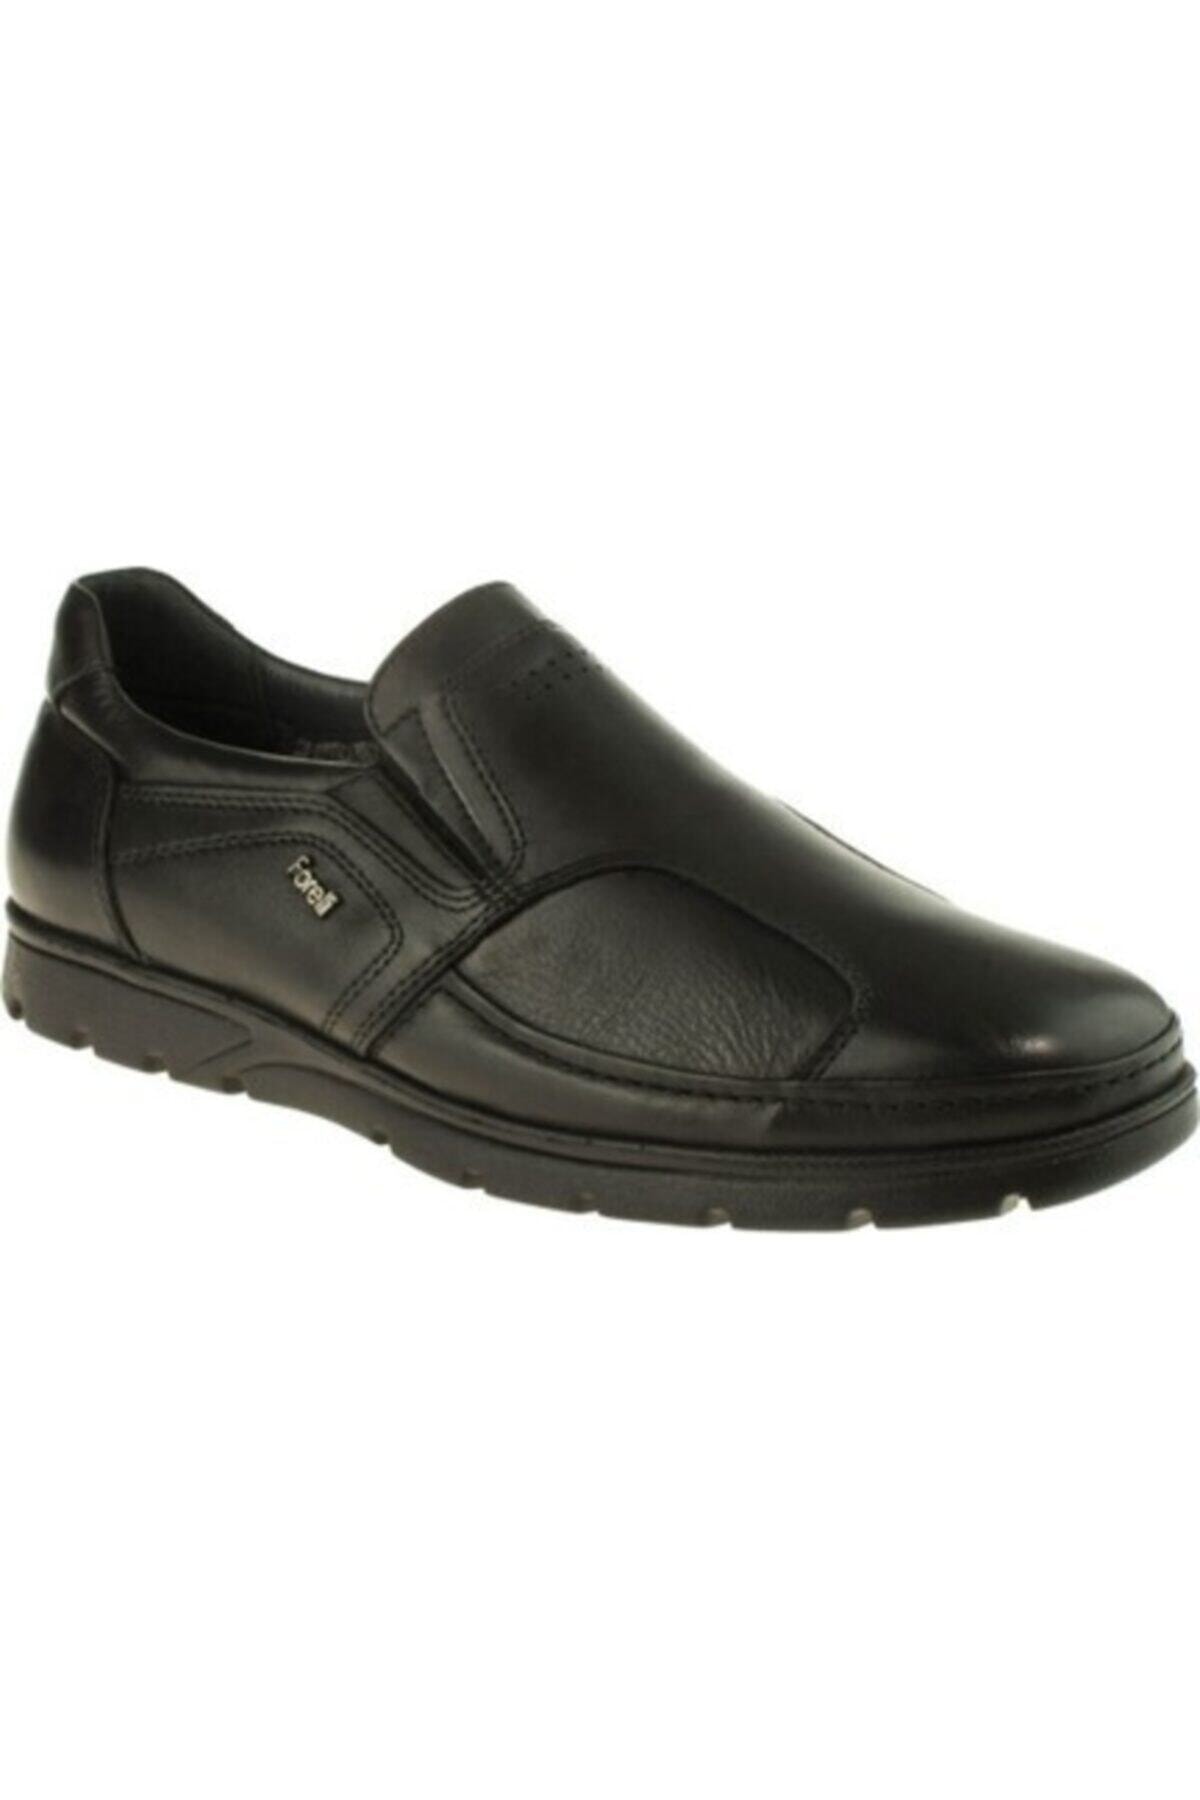 Forelli Hoka-h Comfort Men's Shoes Black